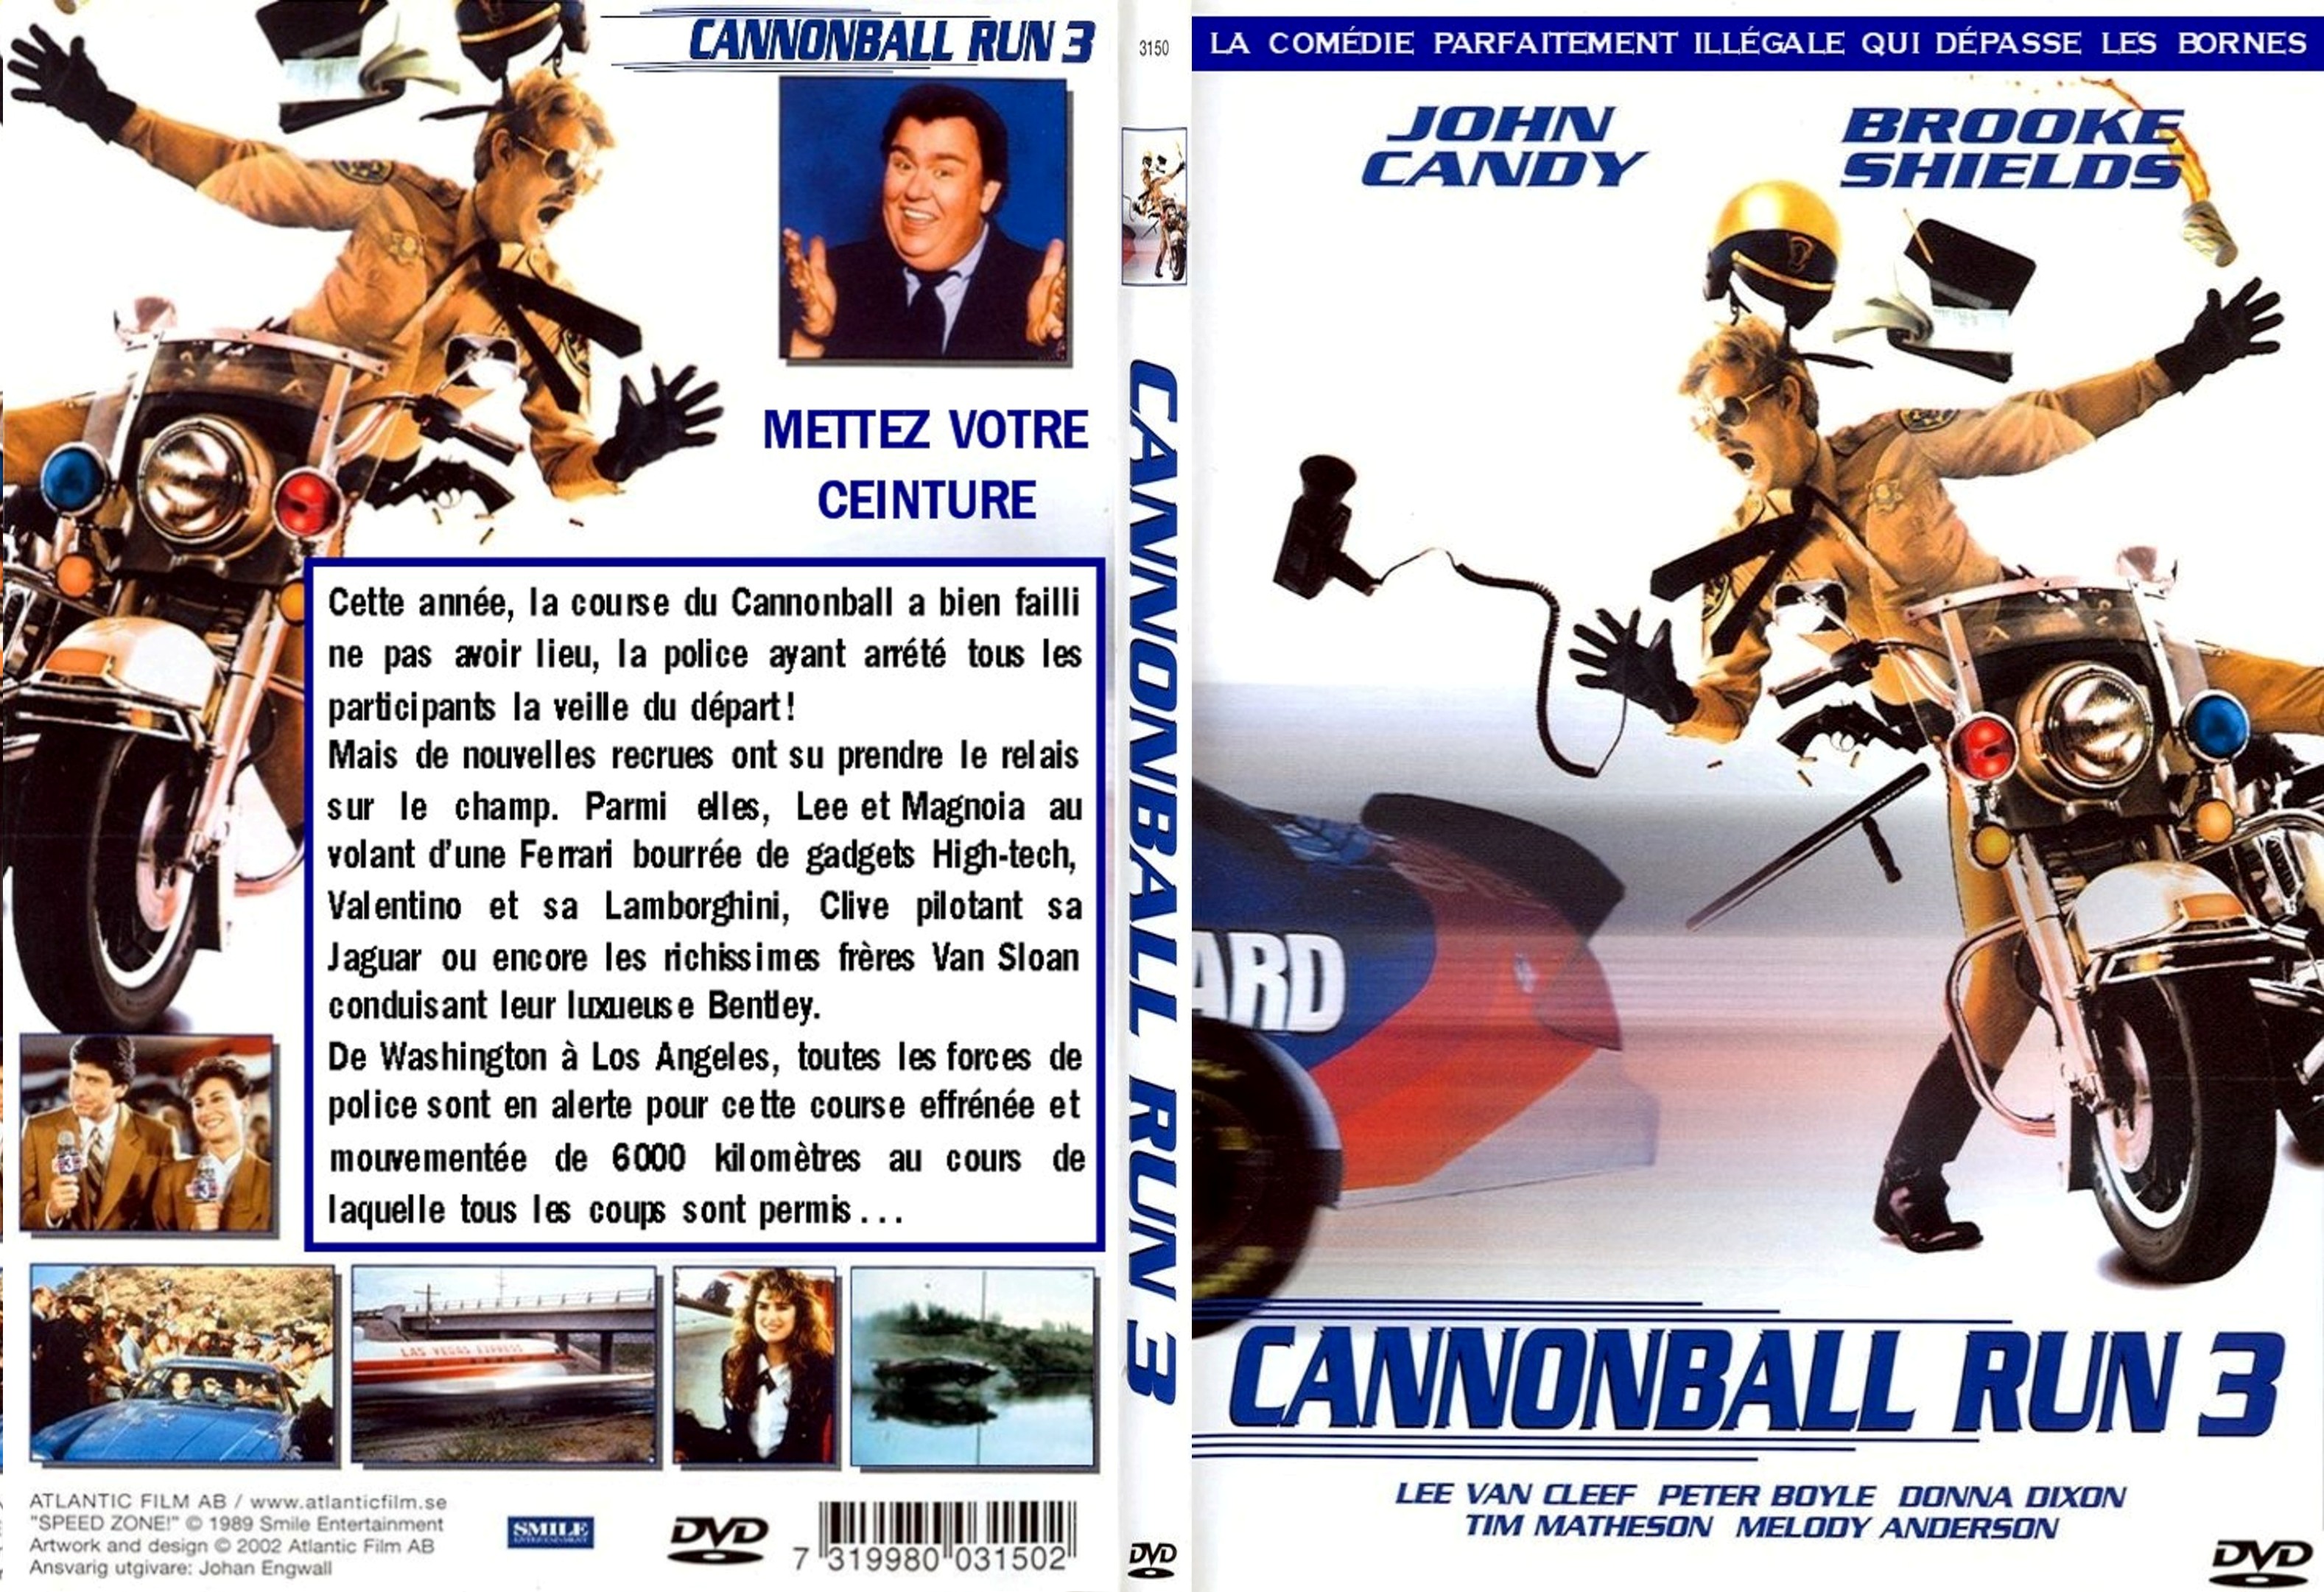 Jaquette DVD Canonball run 3 custom - SLIM